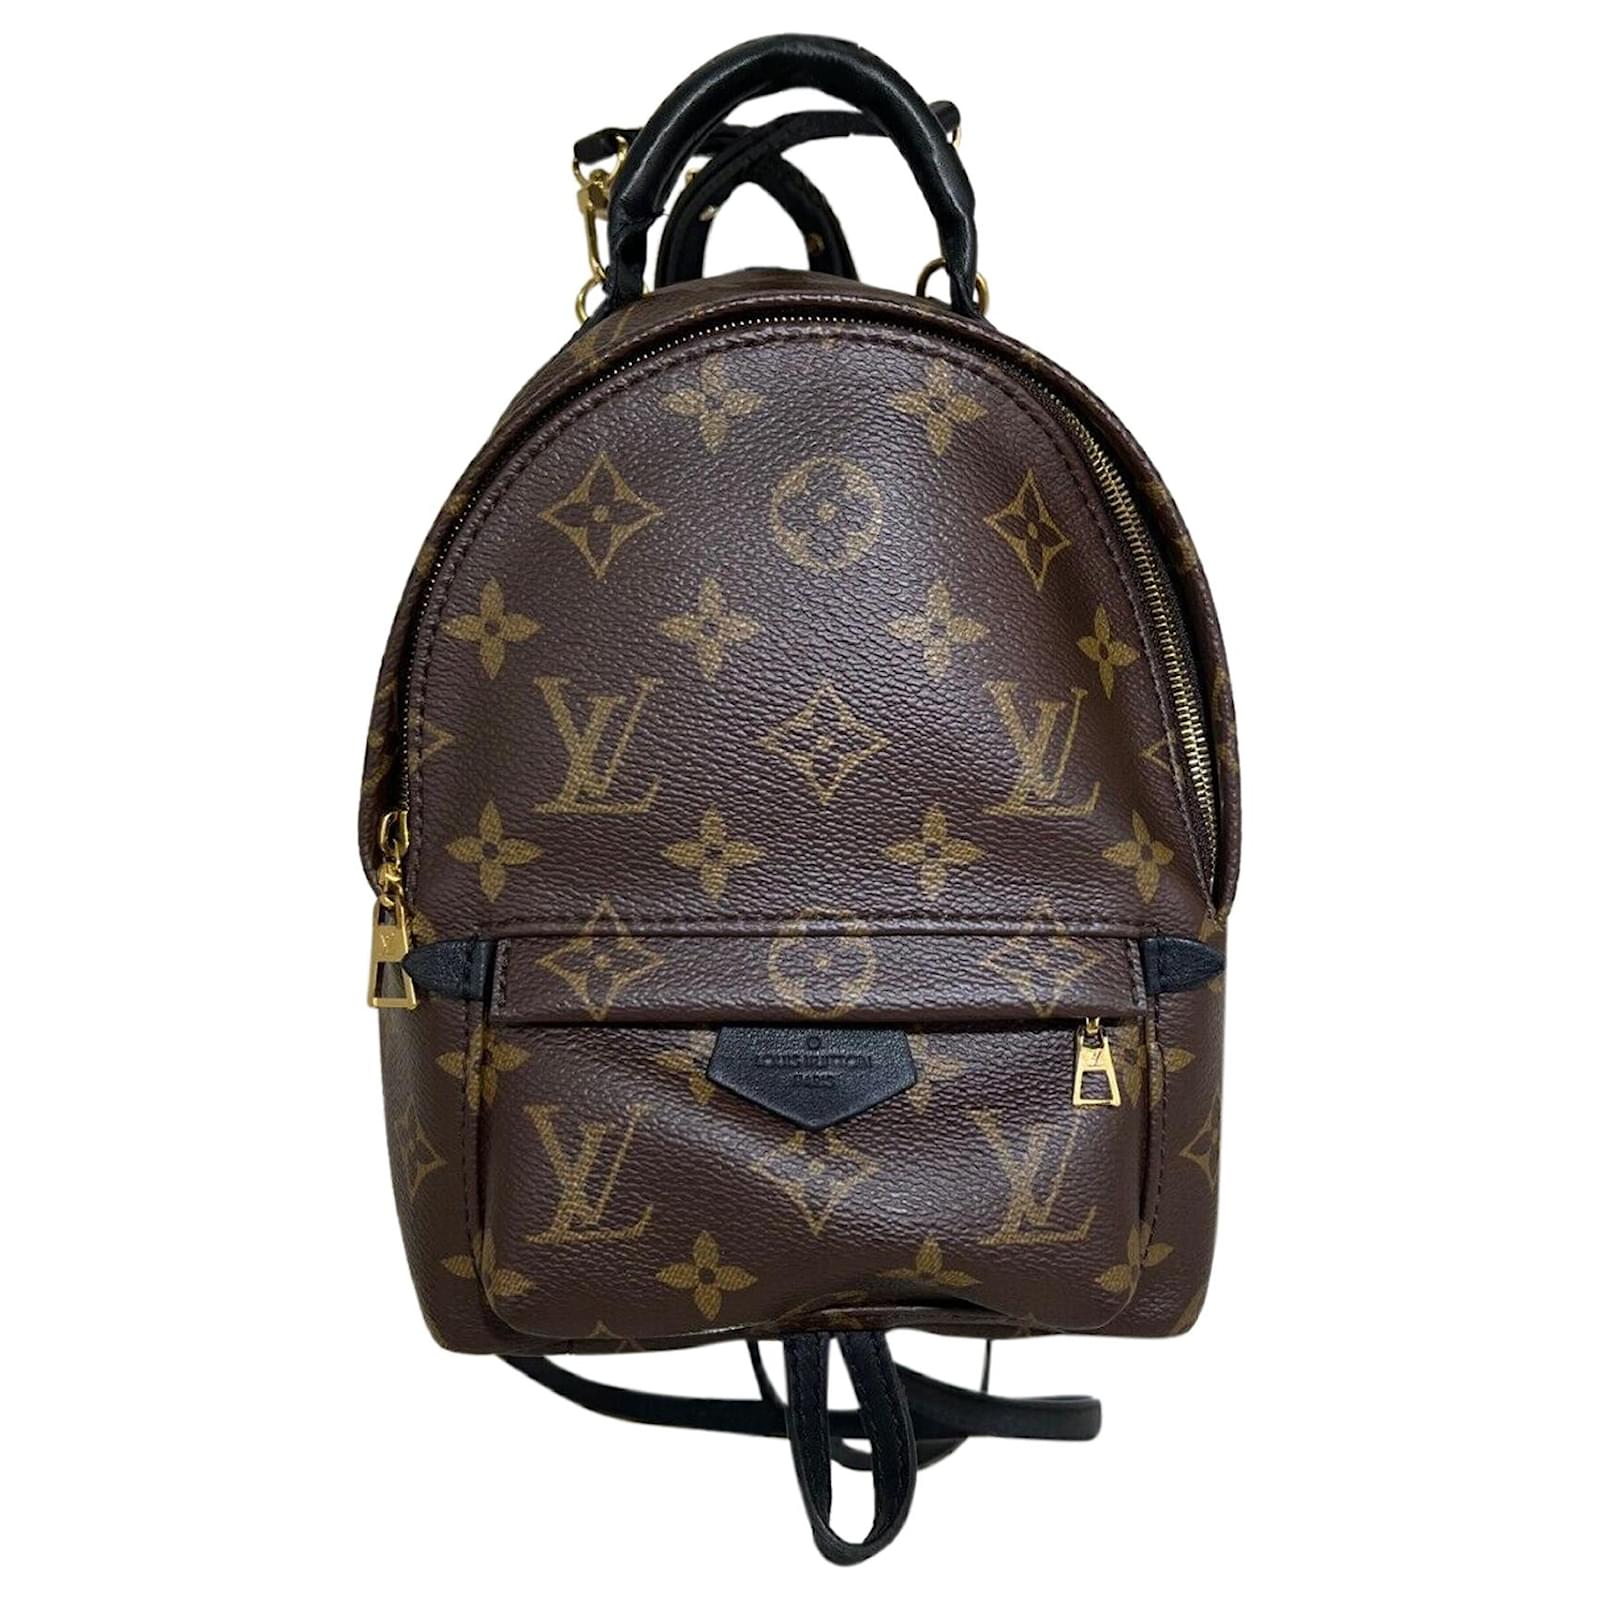 Louis Vuitton Introducing New Backpack Collection  Bragmybag  Louis  vuitton backpack Louis vuitton handbags Louis vuitton mens bag